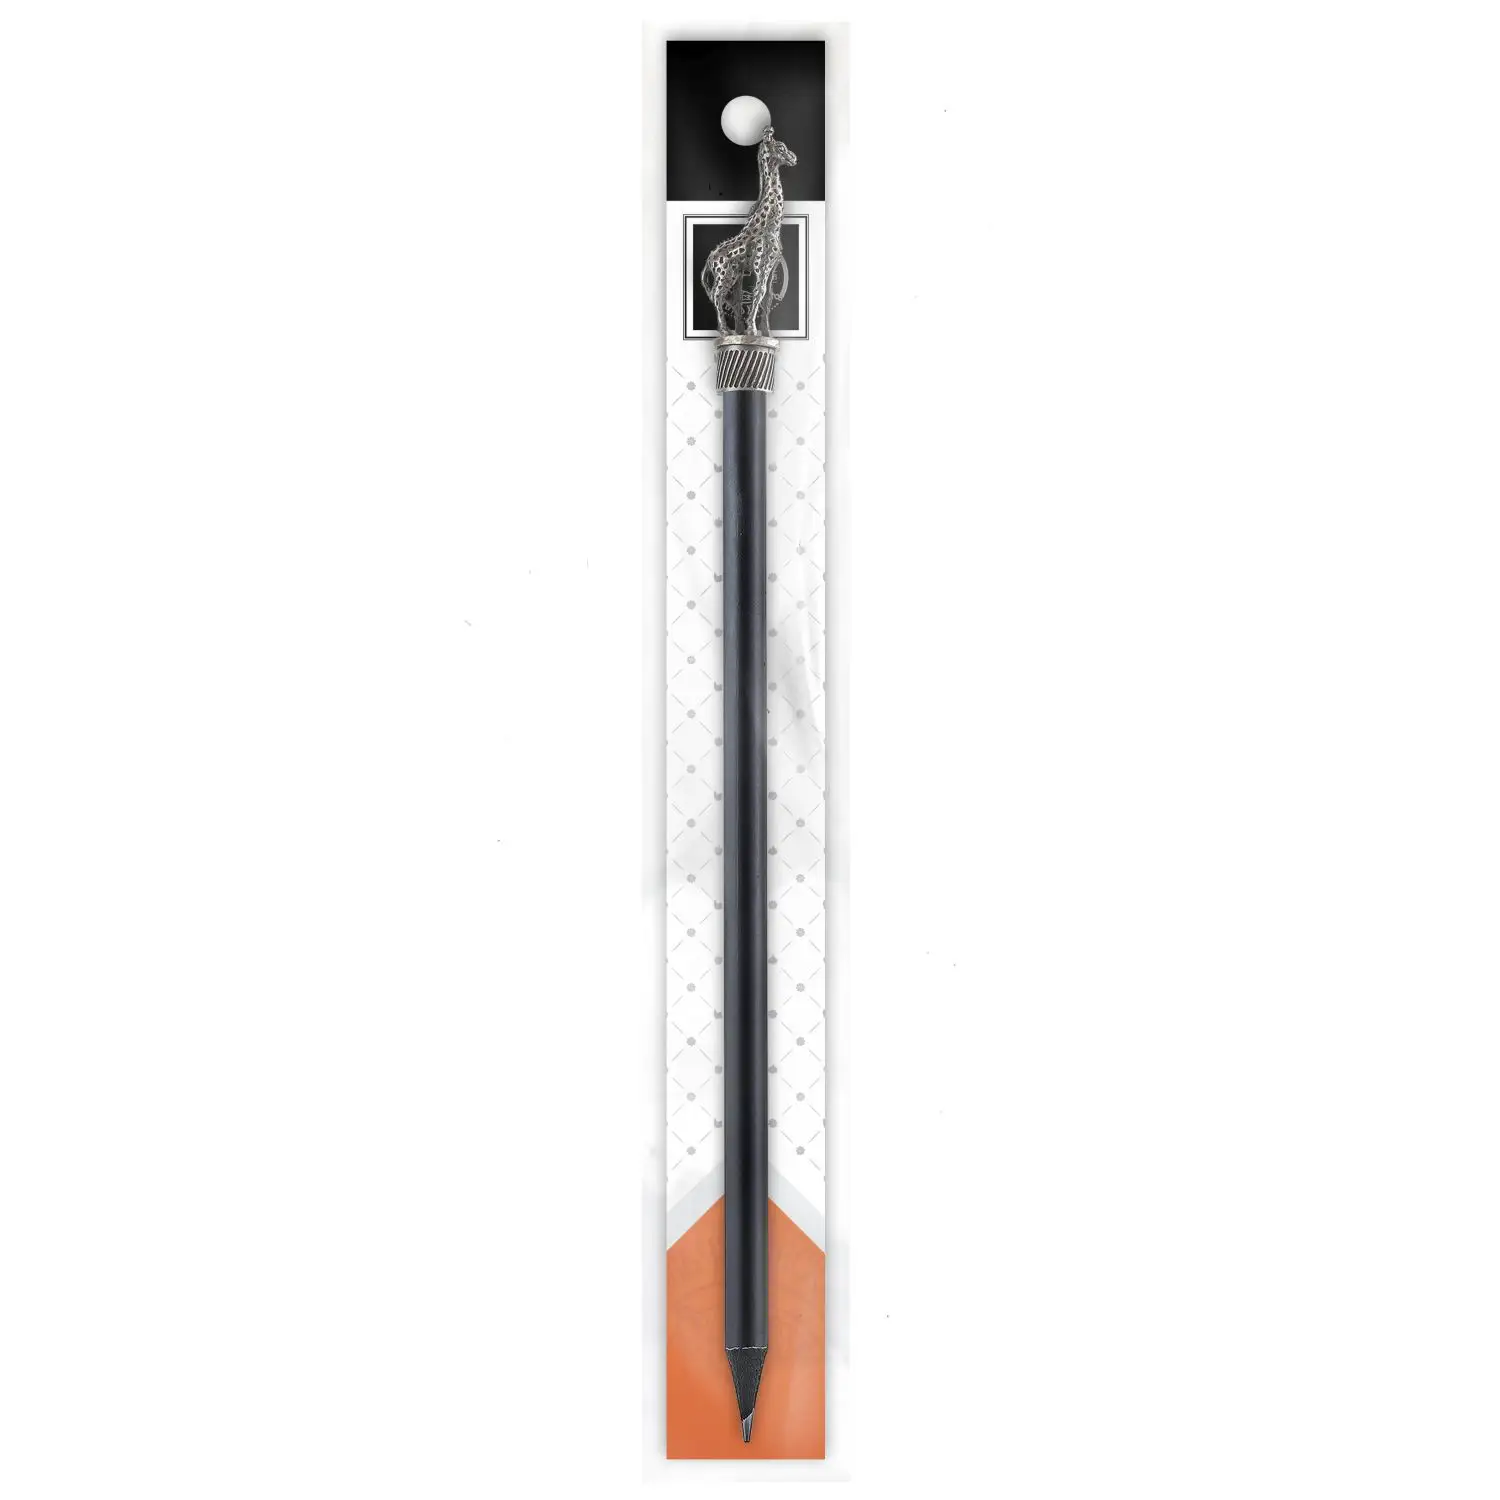 Карандаш Сафари-Жираф латунный посеребренный с чернением карандаш самовар латунный посеребренный с чернением